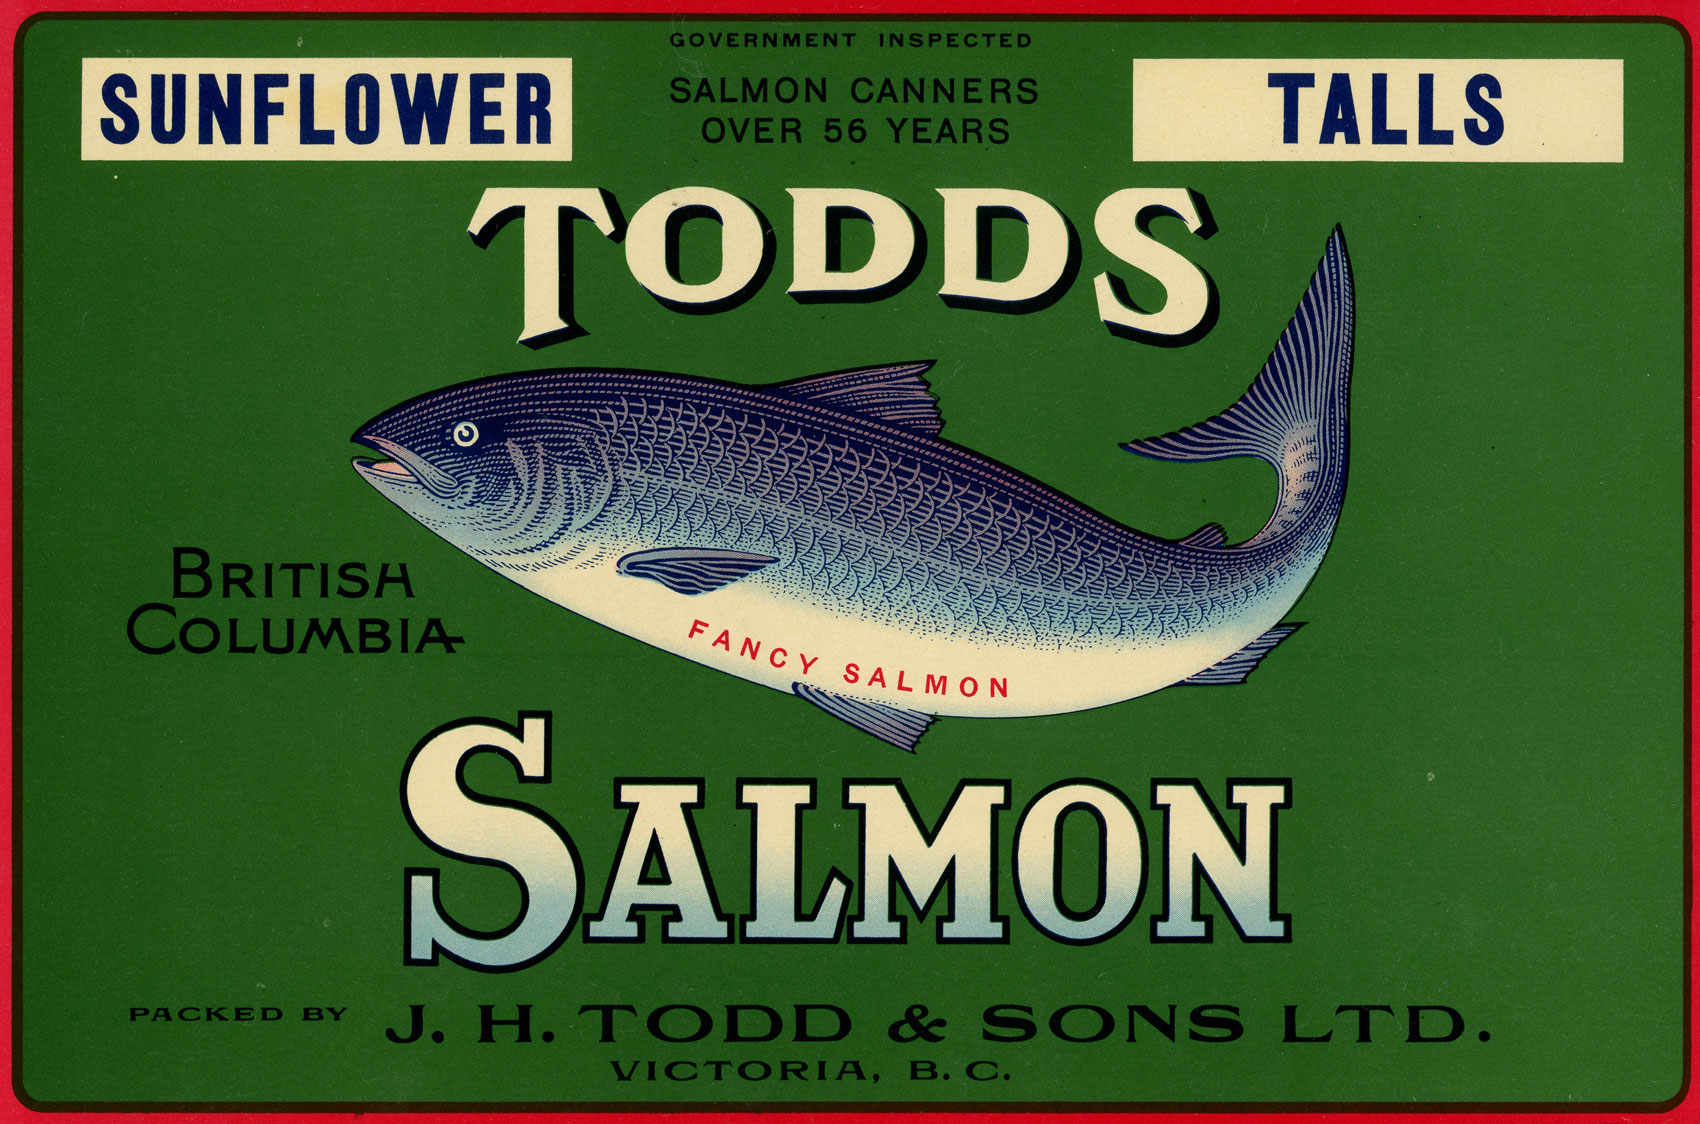 Étiquette verte montrant un saumon et l'inscription « Sunflower Talls. Todds British Columbia Salmon packed by J.H. Todd and Sons Ltd. Victoria B.C. ».